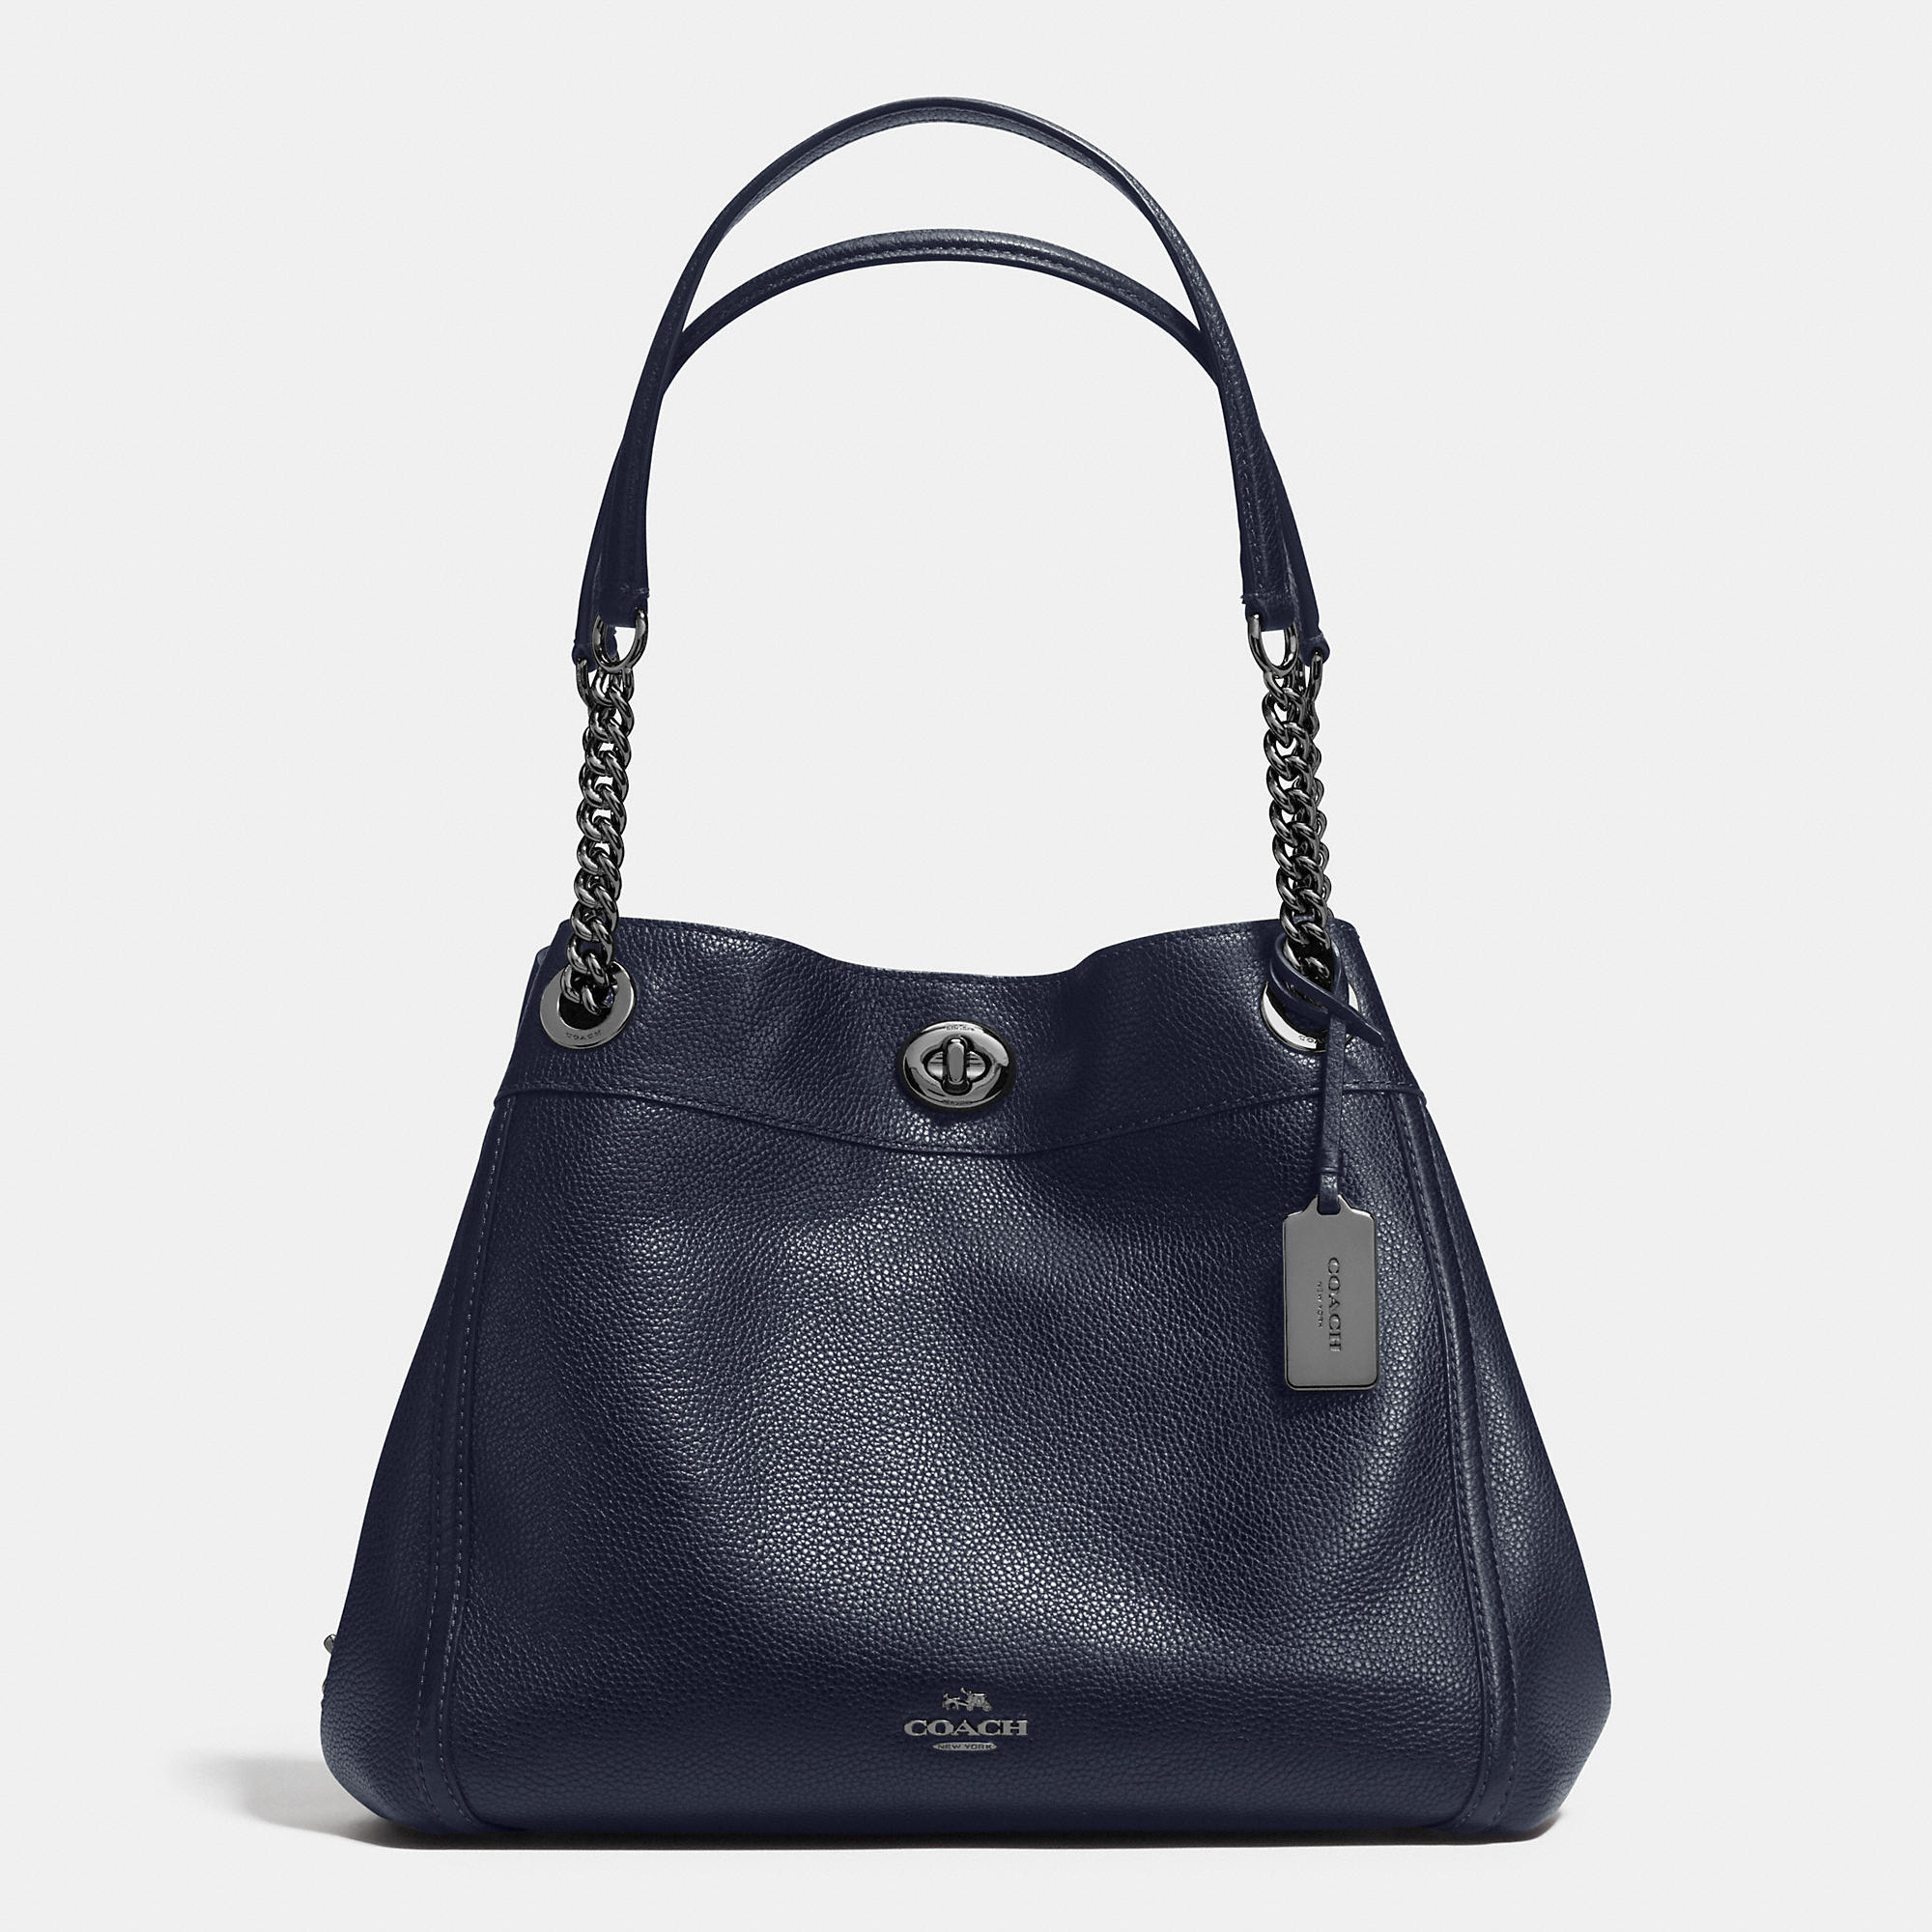 COACH Turnlock Edie Shoulder Bag In Polished Pebble Leather in Black - Lyst